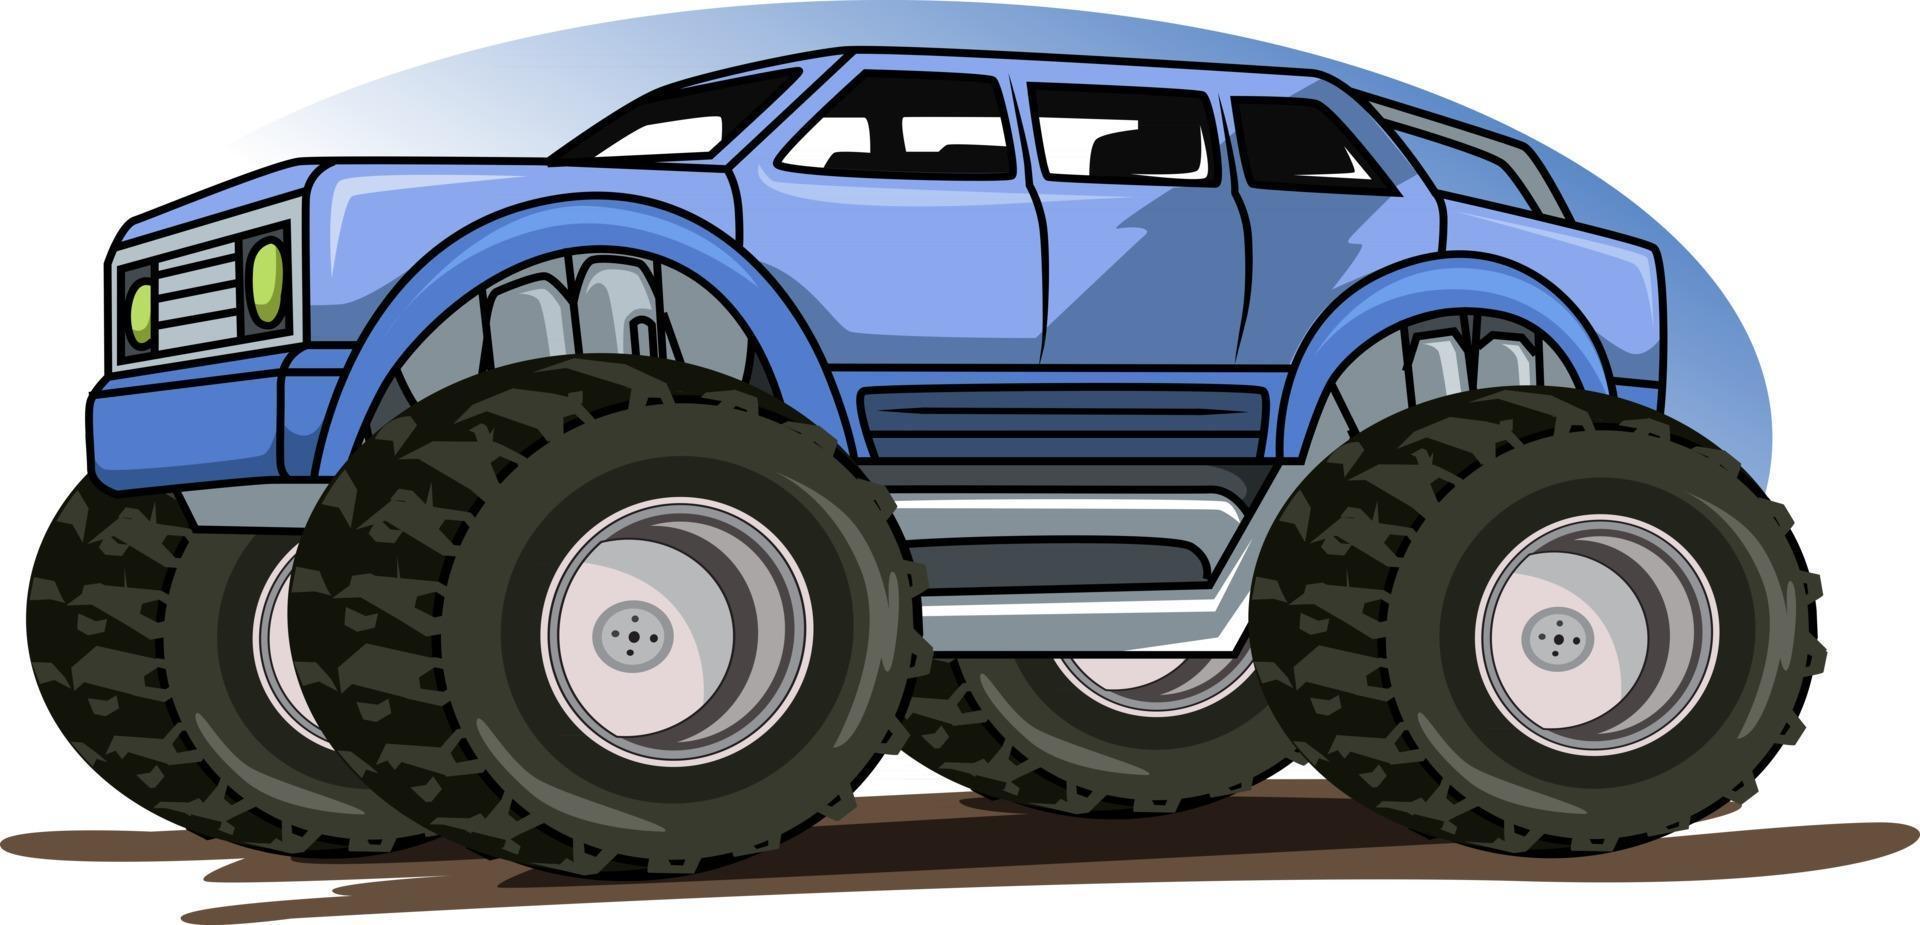 monster truck car illustration vector